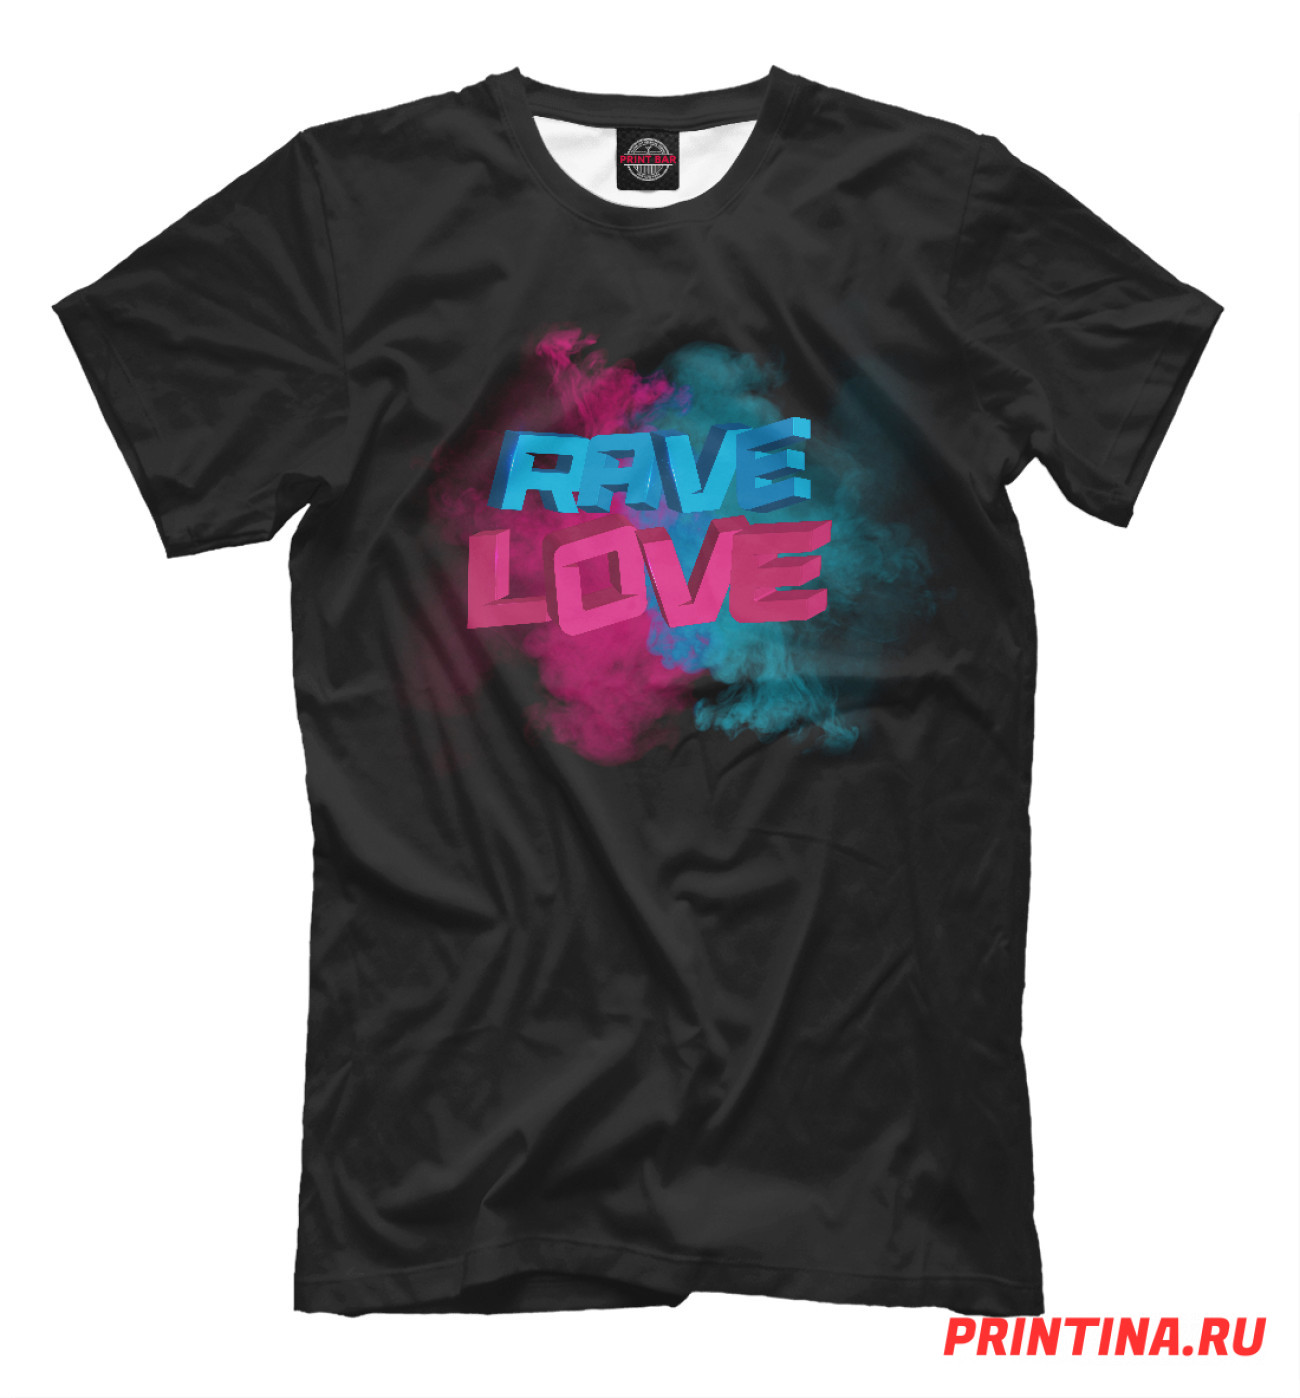 Мужская Футболка RAVE LOVE, артикул: DJS-606528-fut-2